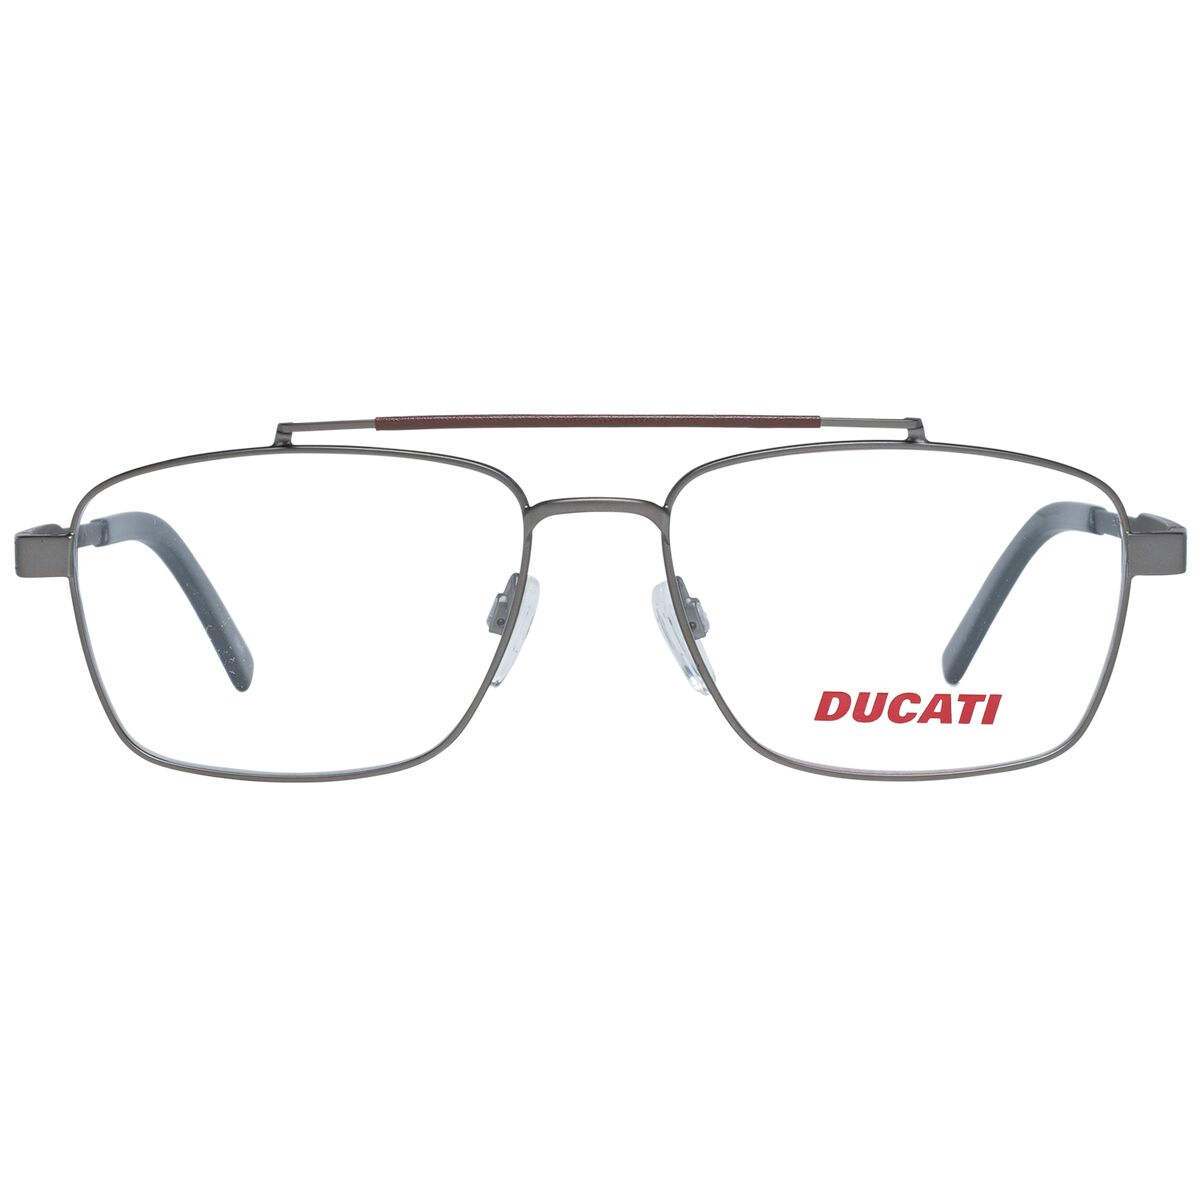 Kaufe Brillenfassung Ducati DA3019 54920 bei AWK Flagship um € 76.00